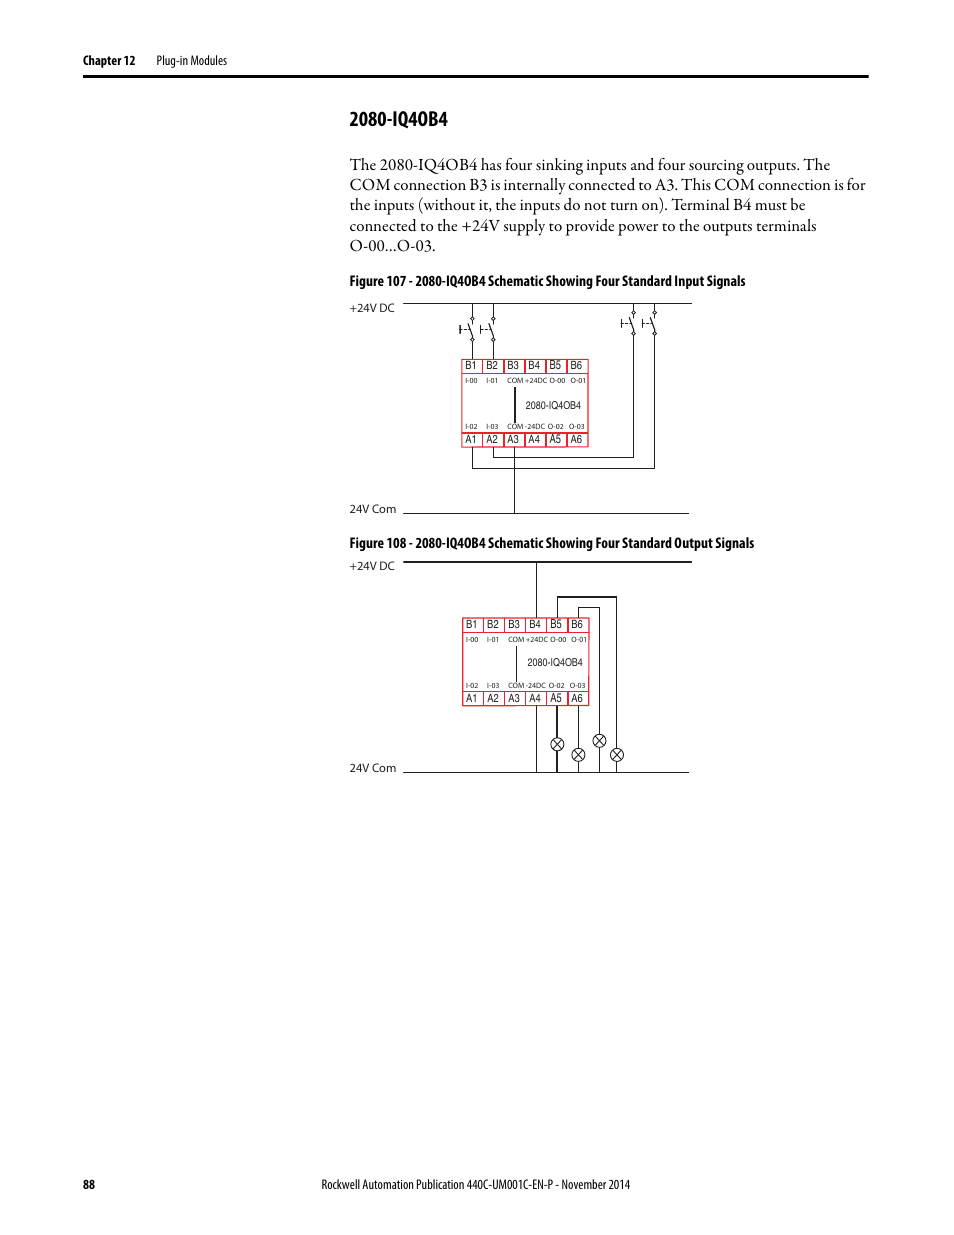 safety relay wiring diagram 440c-cr30